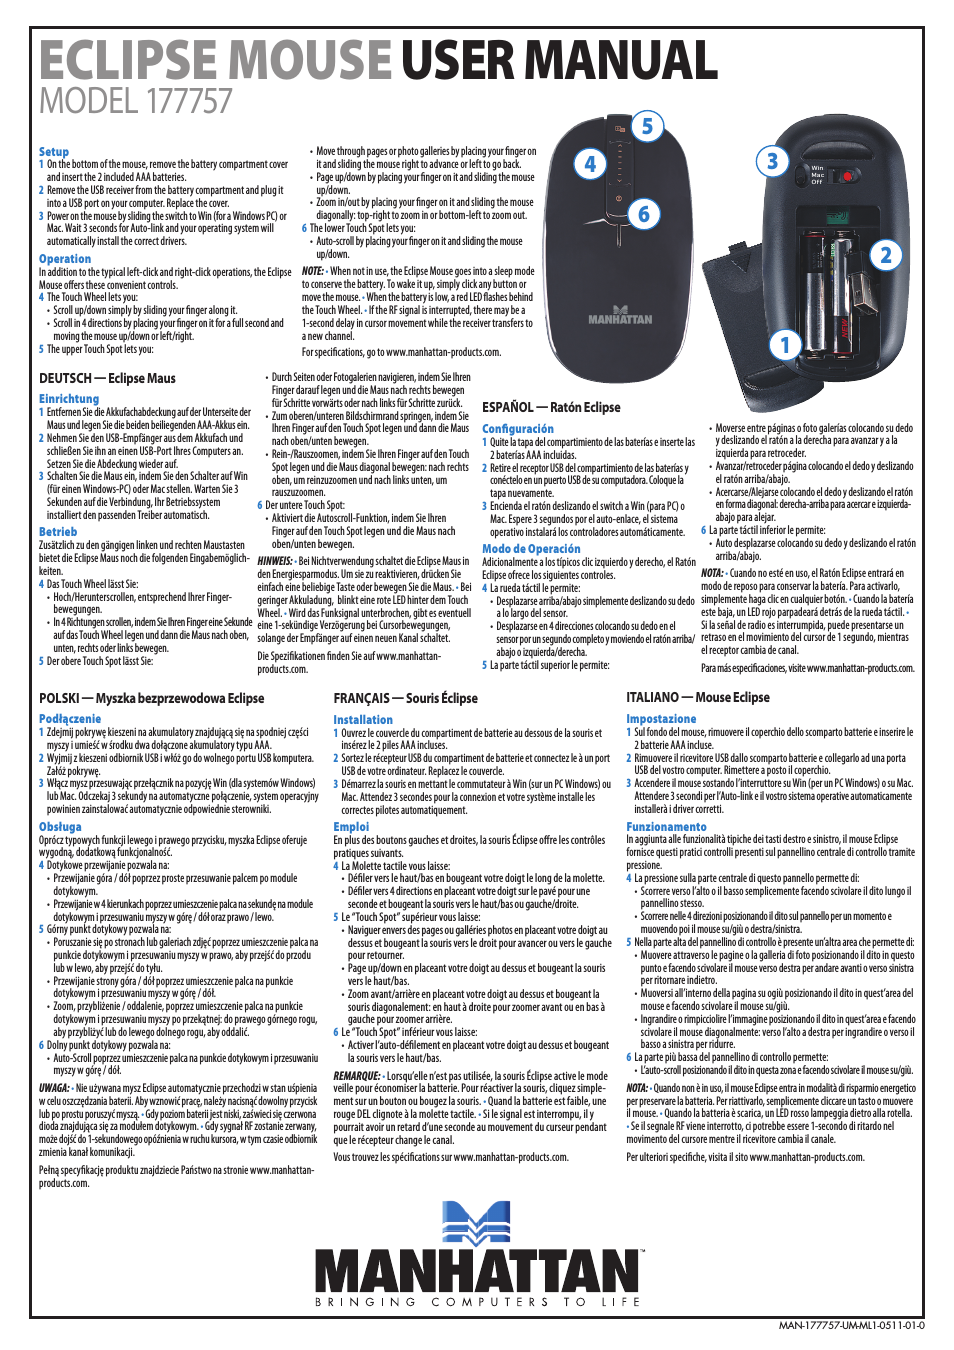 177757 Eclipse Mouse - Manual (Multi)